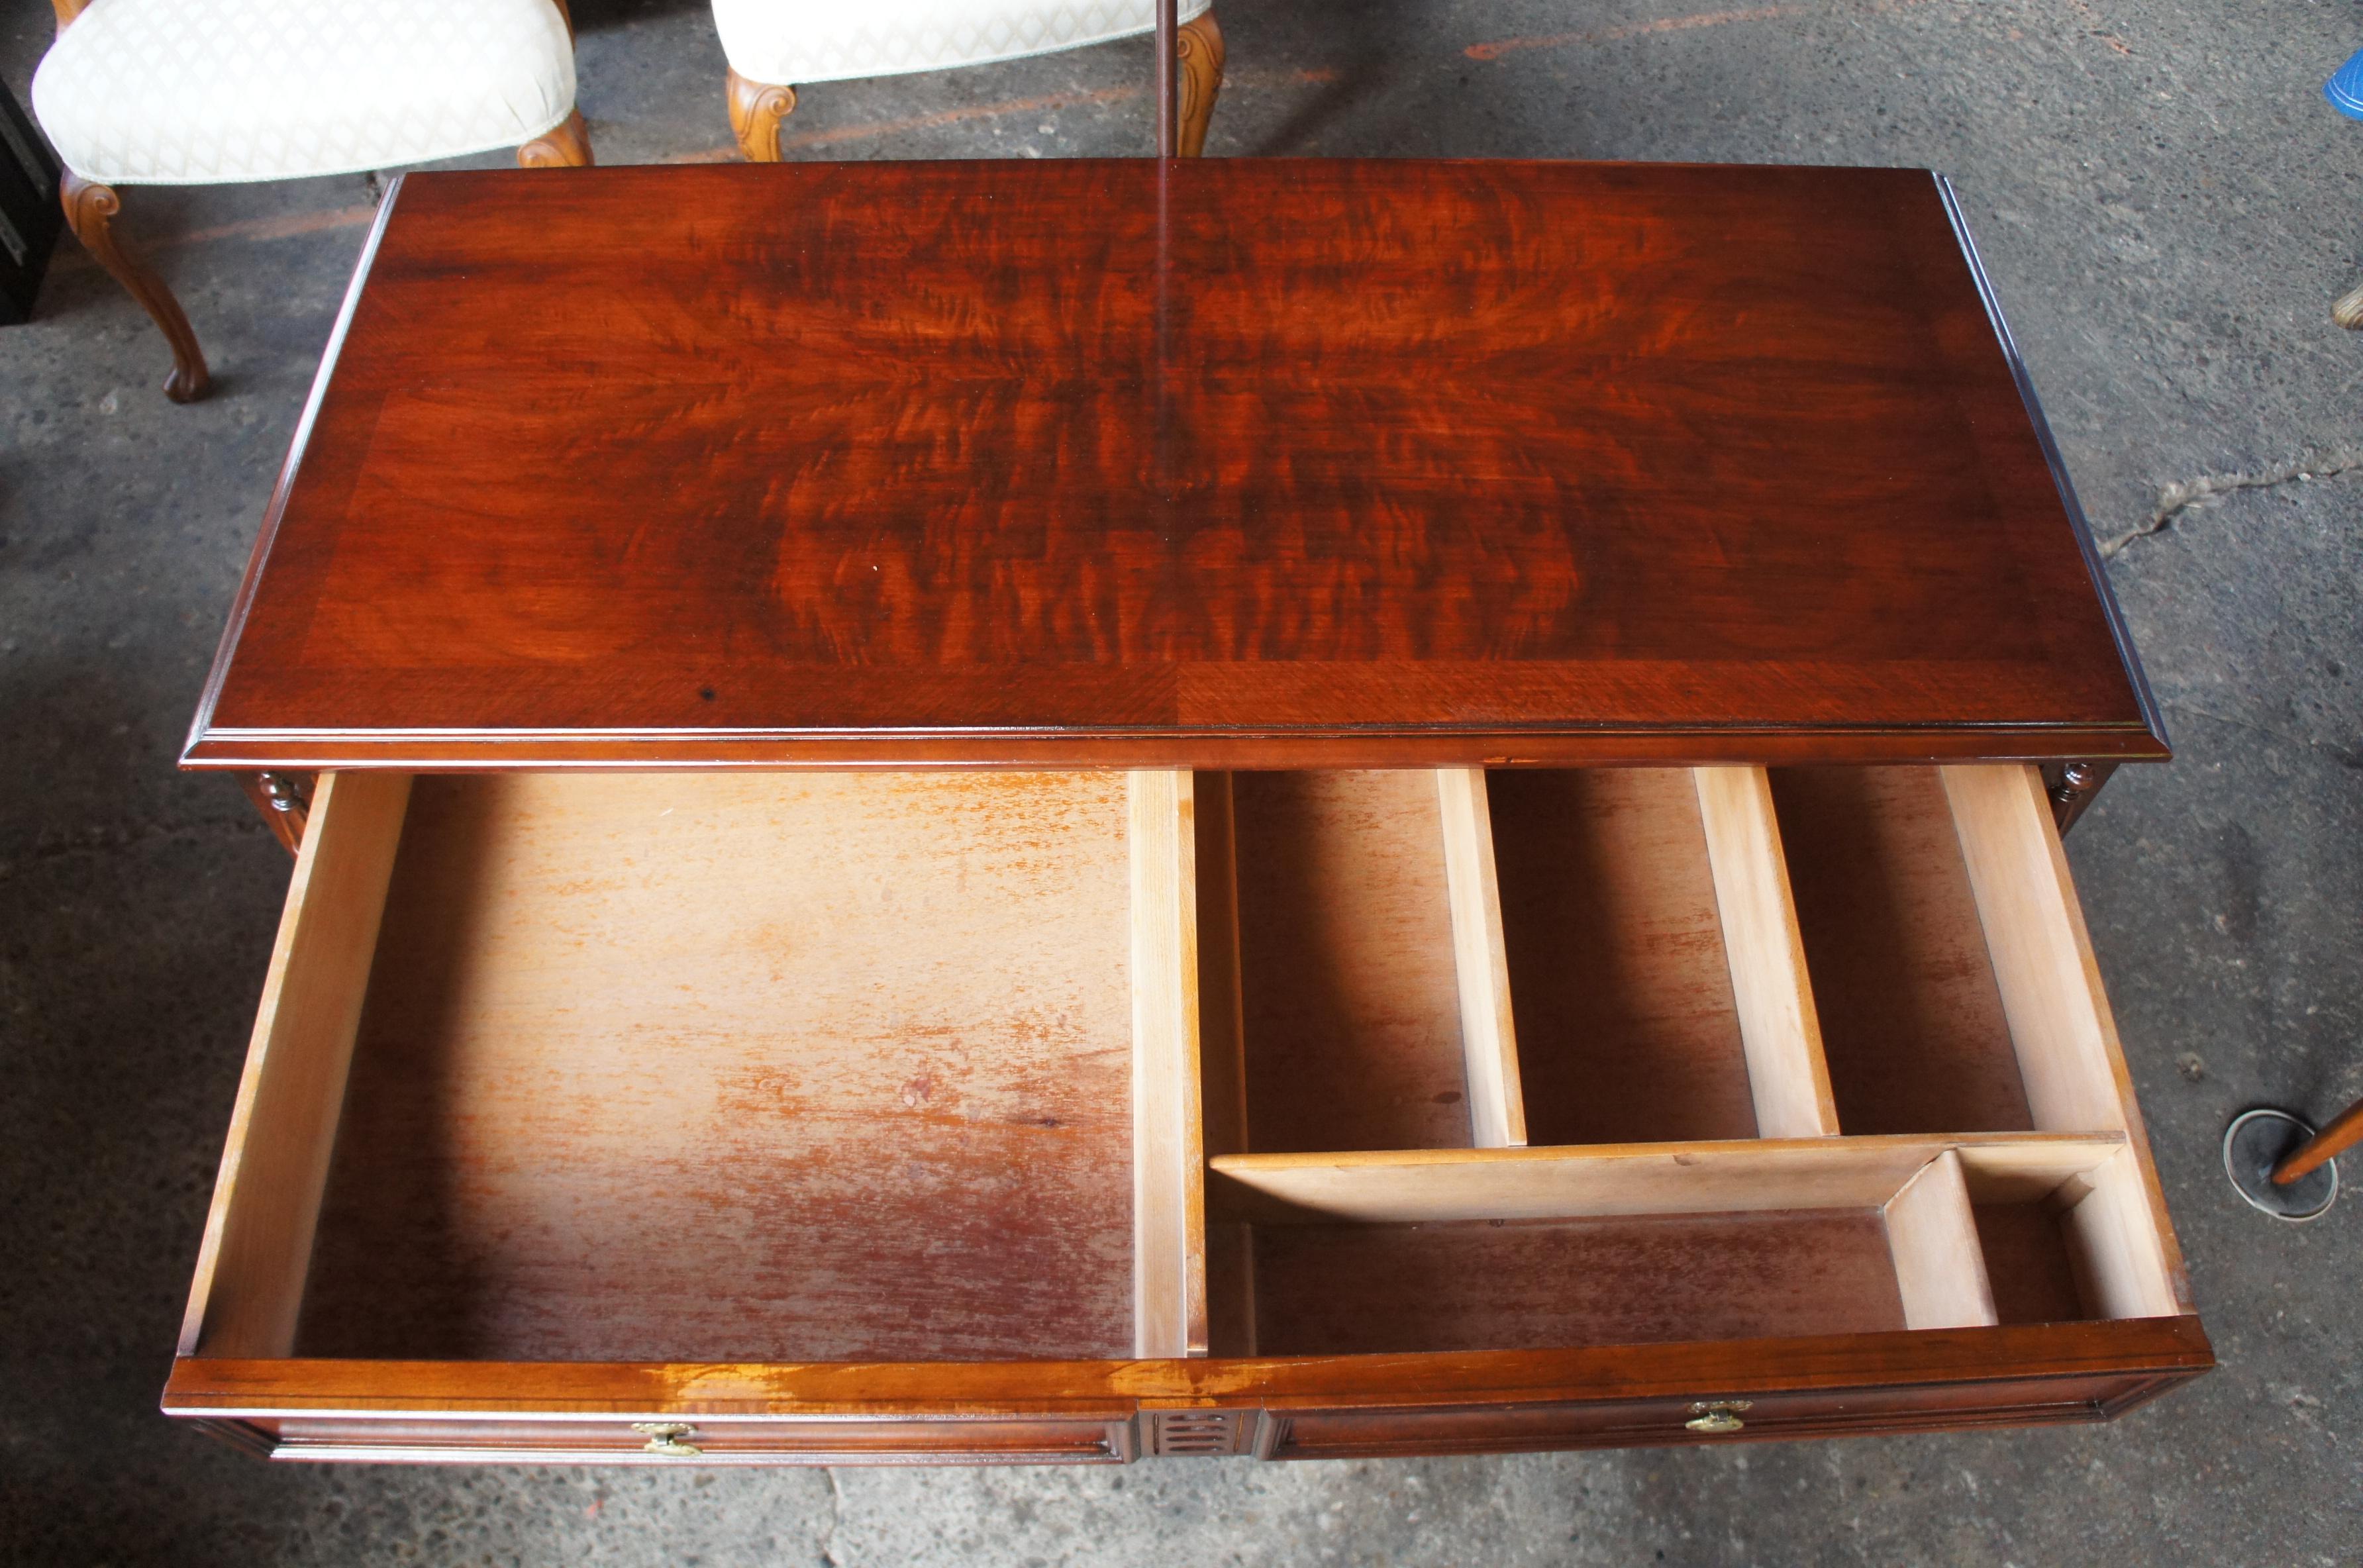 Robert Irwin Furniture Co. Antique Jacobean Revival Walnut Dresser and Mirror 3